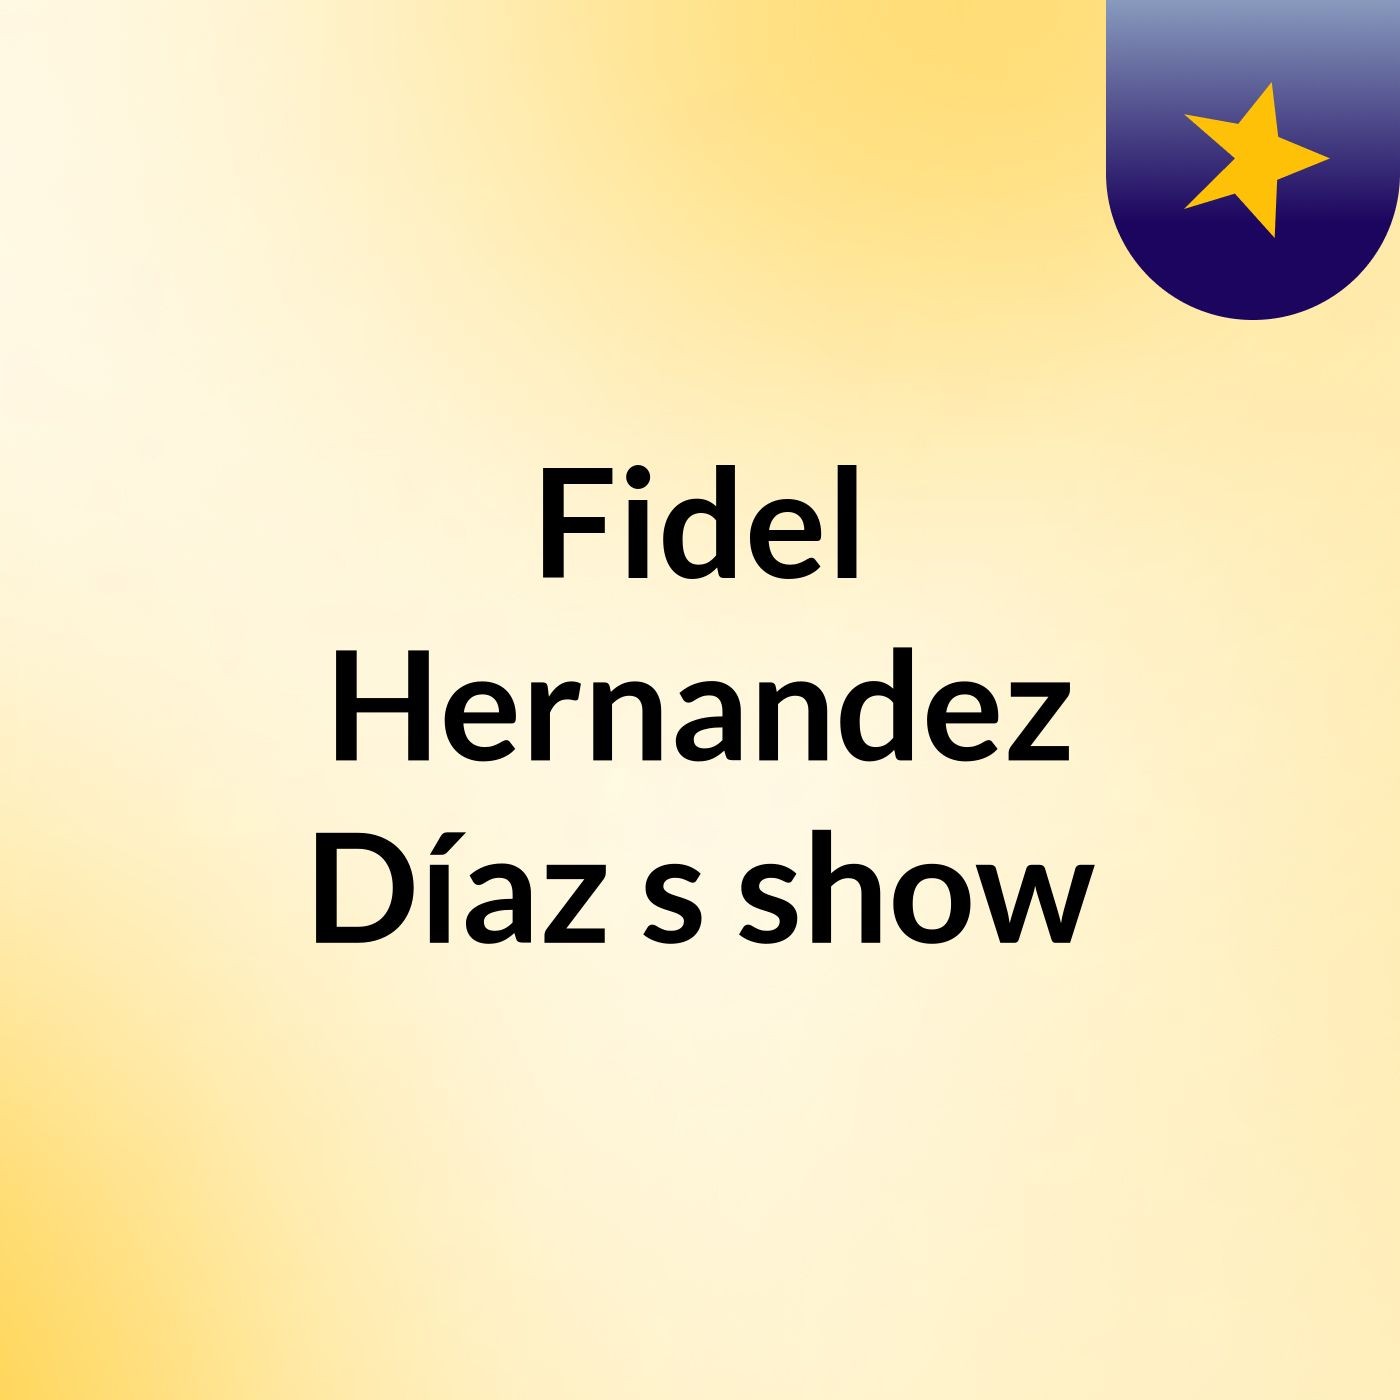 Fidel Hernandez Díaz's show